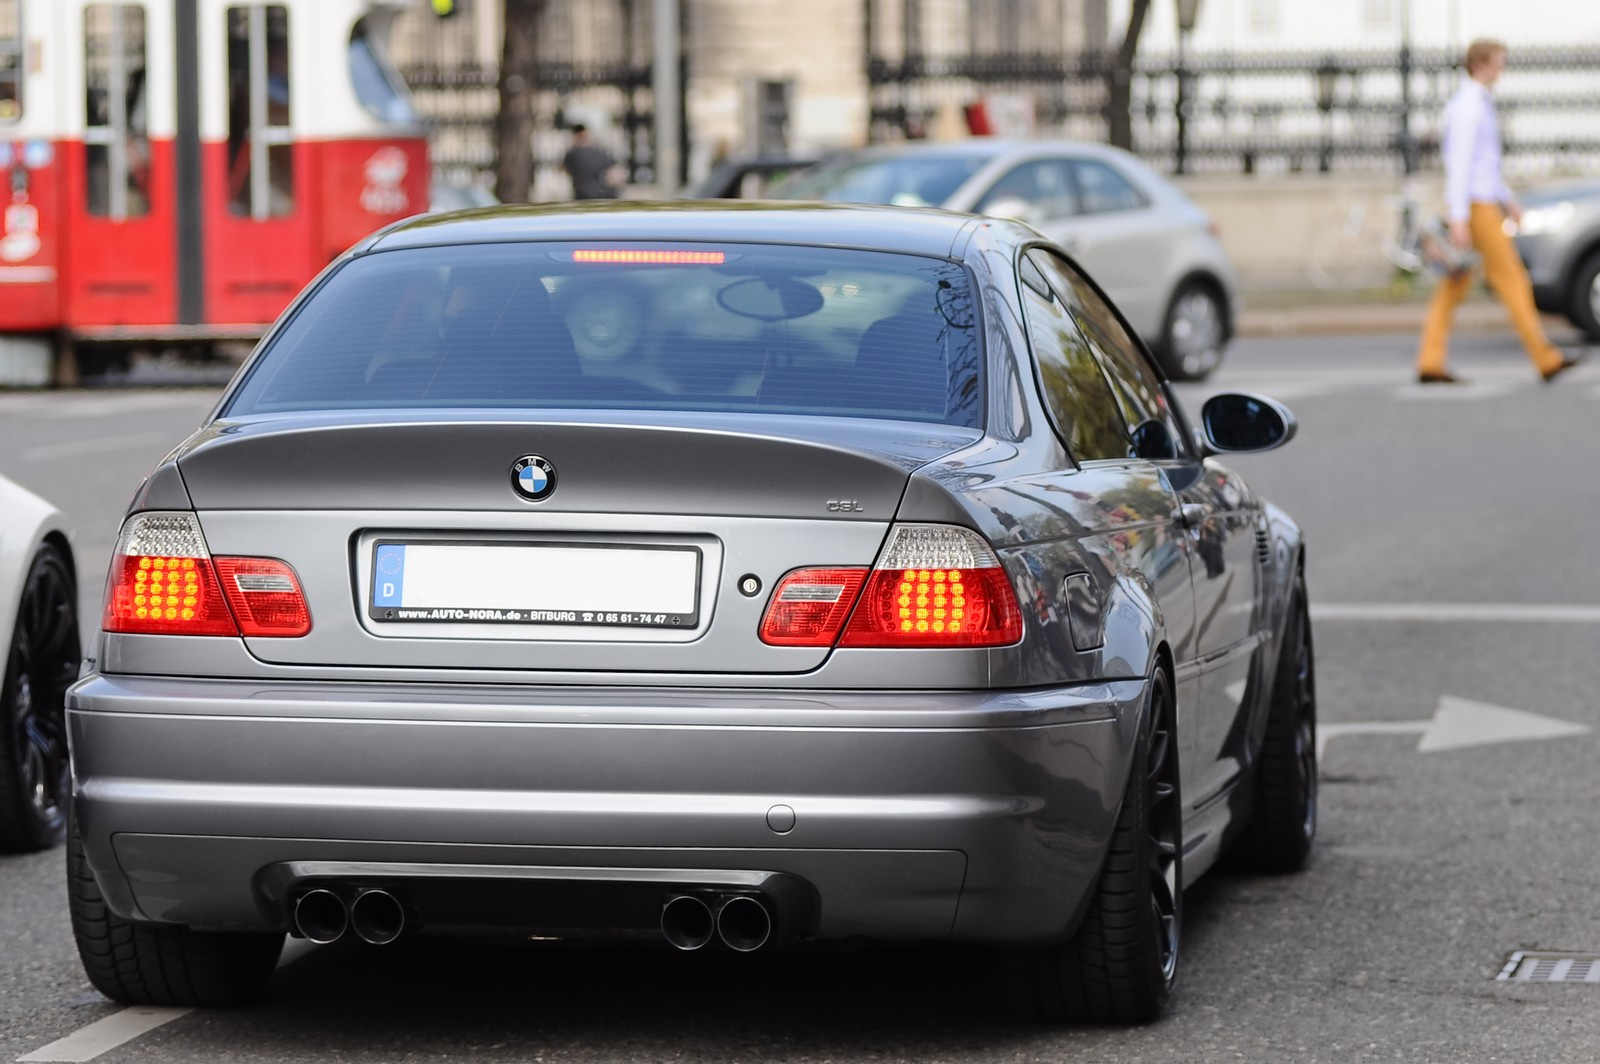 BMW M3 CSL